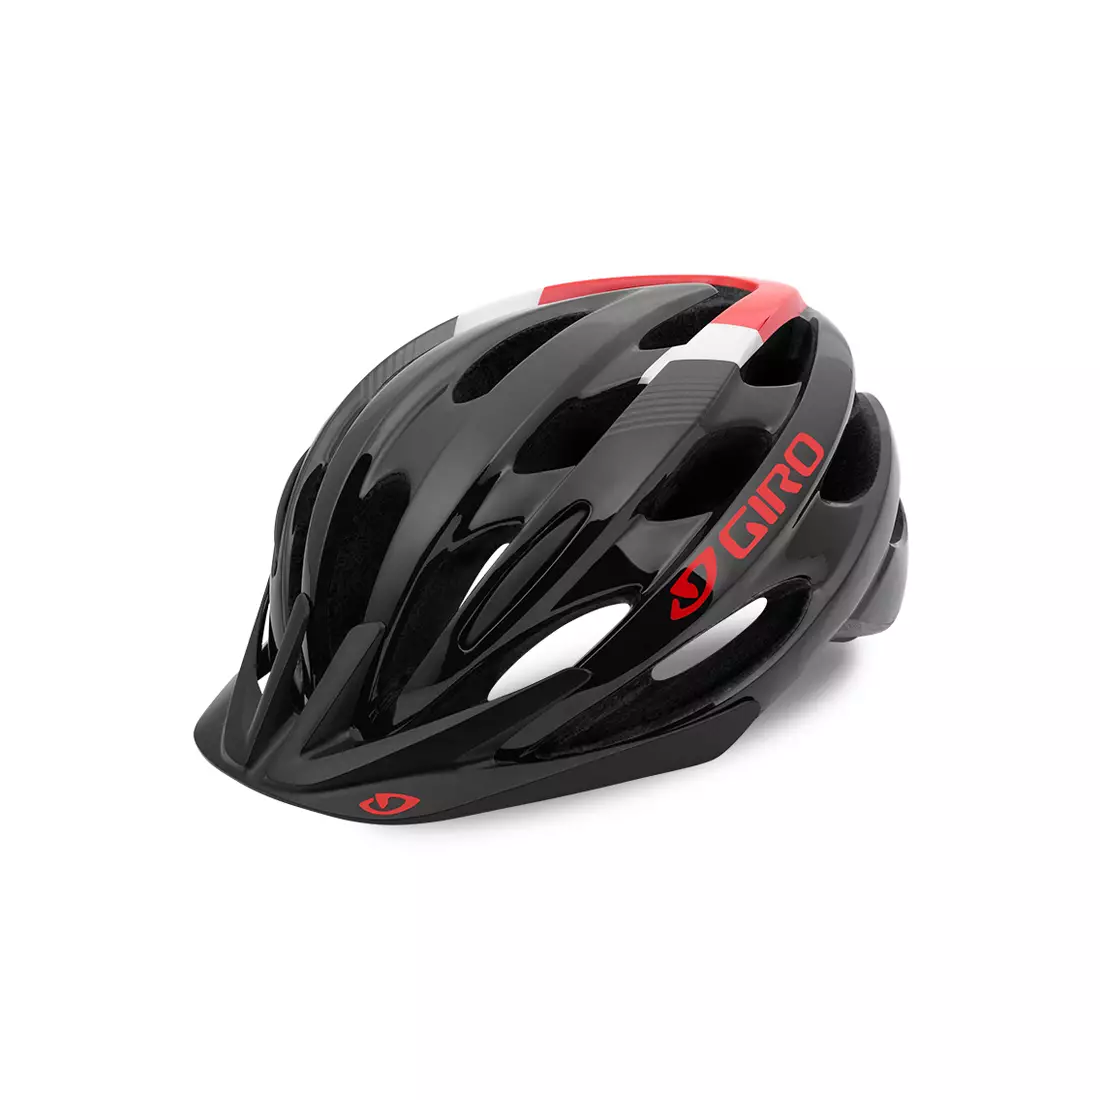 GIRO REVEL black bright red SMU mtb helmet